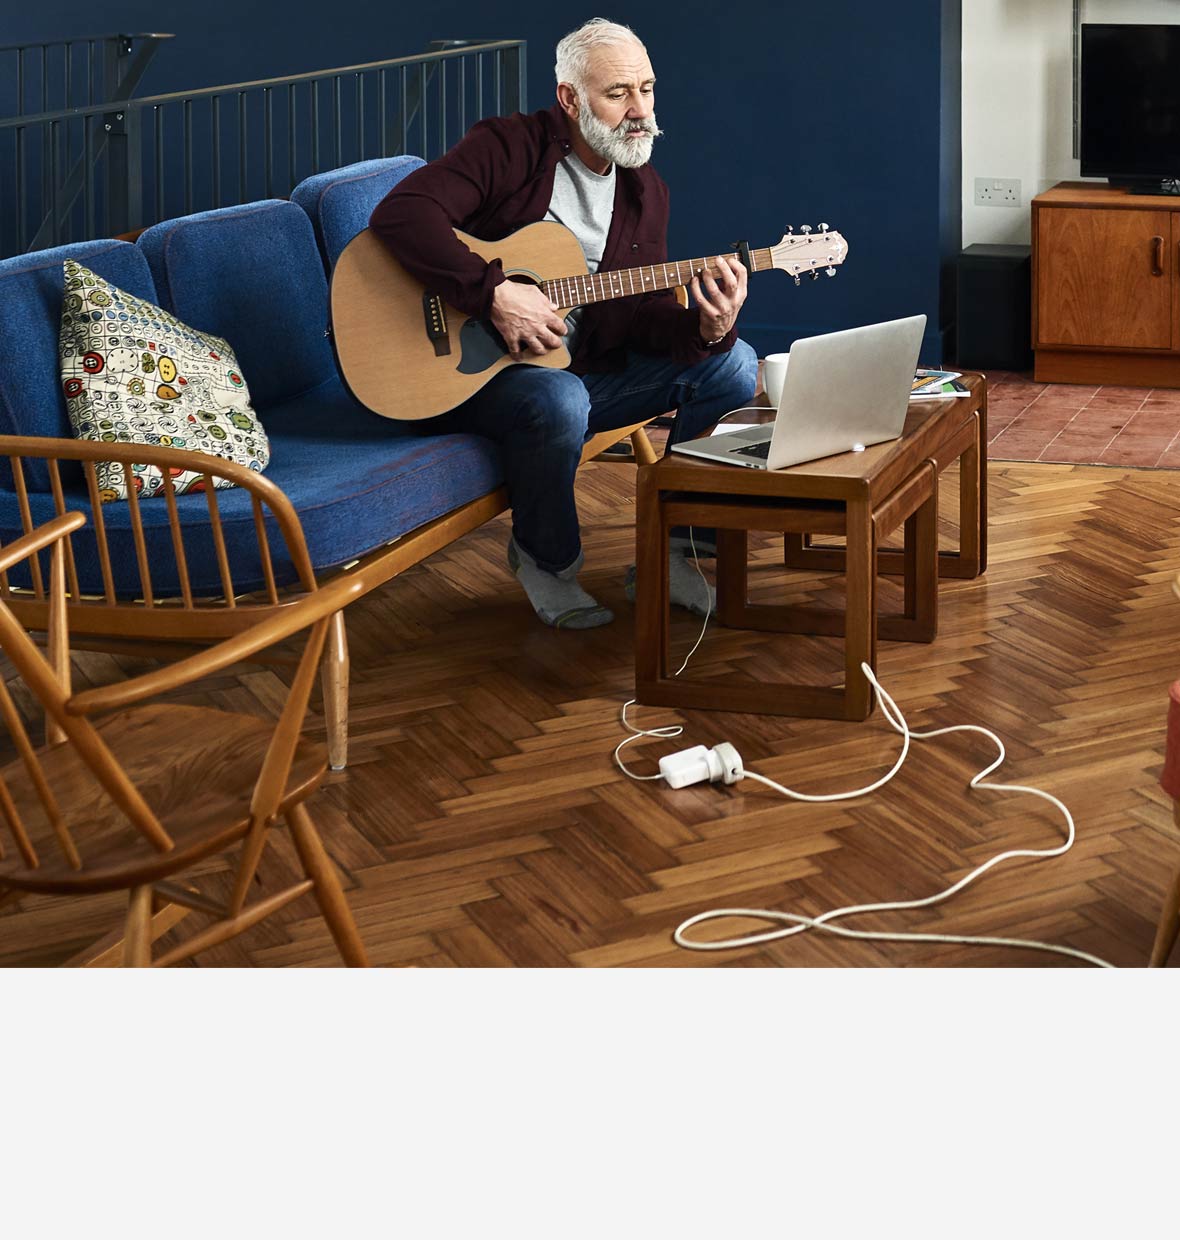 Man playing guitar in his lounge